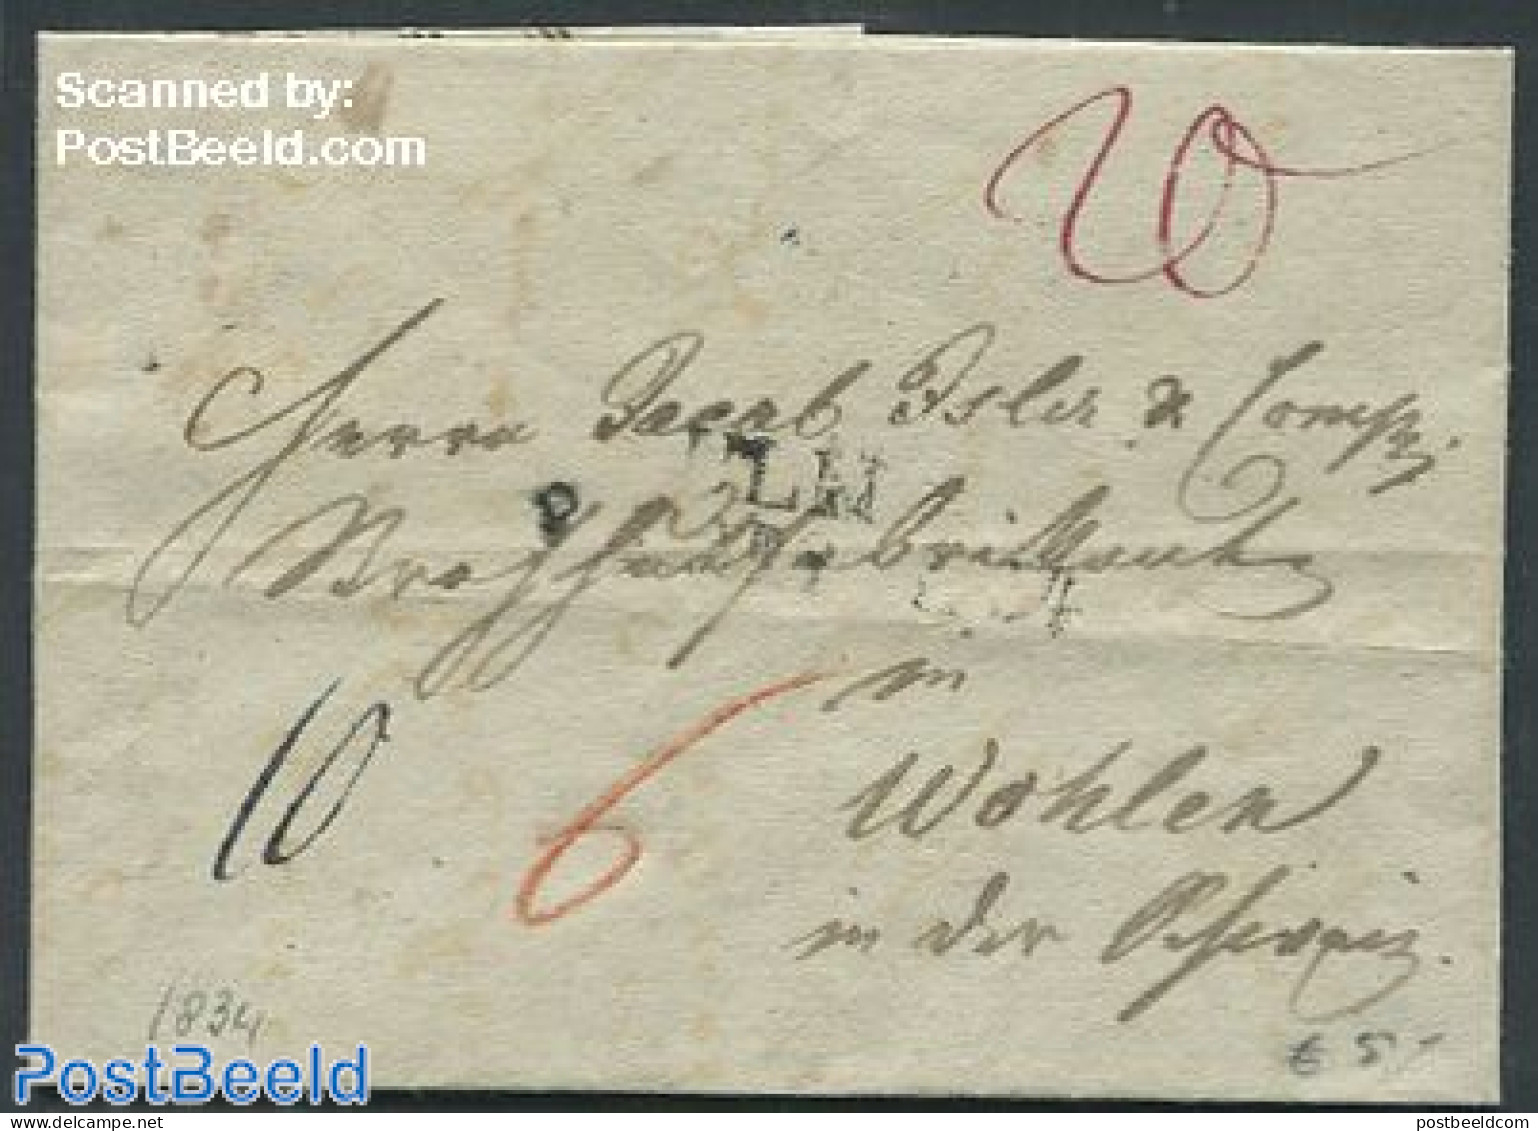 Switzerland 1834 Folding Letter From Switzerland To Wohlen, Germany, Postal History - Storia Postale